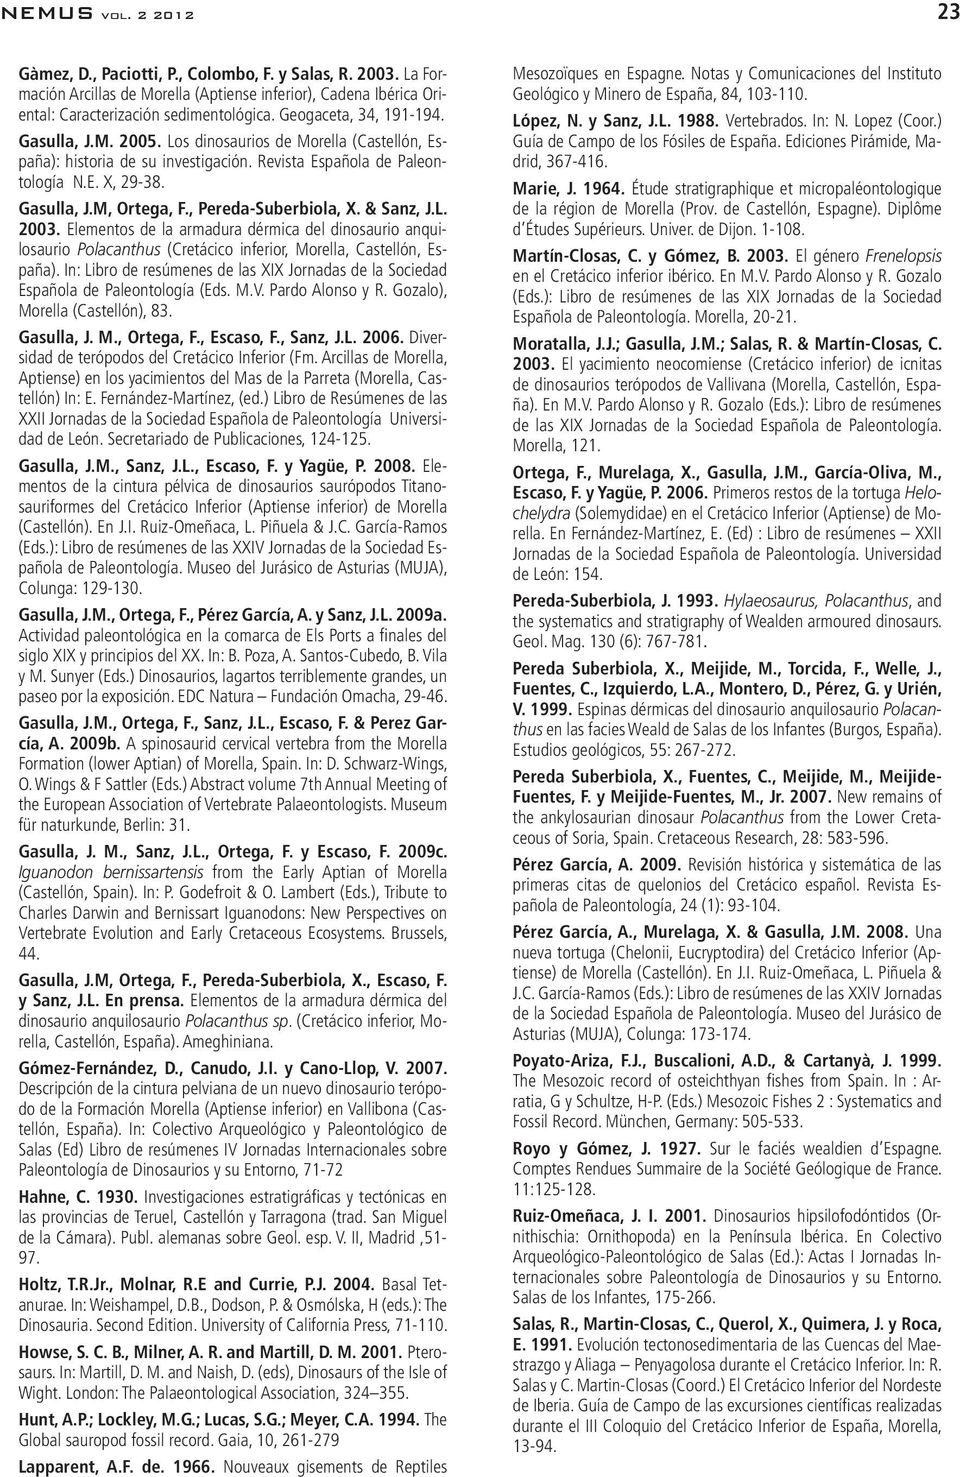 , Pereda-Suberbiola, X. & Sanz, J.L. 2003. Elementos de la armadura dérmica del dinosaurio anquilosaurio Polacanthus (Cretácico inferior, Morella, Castellón, España).